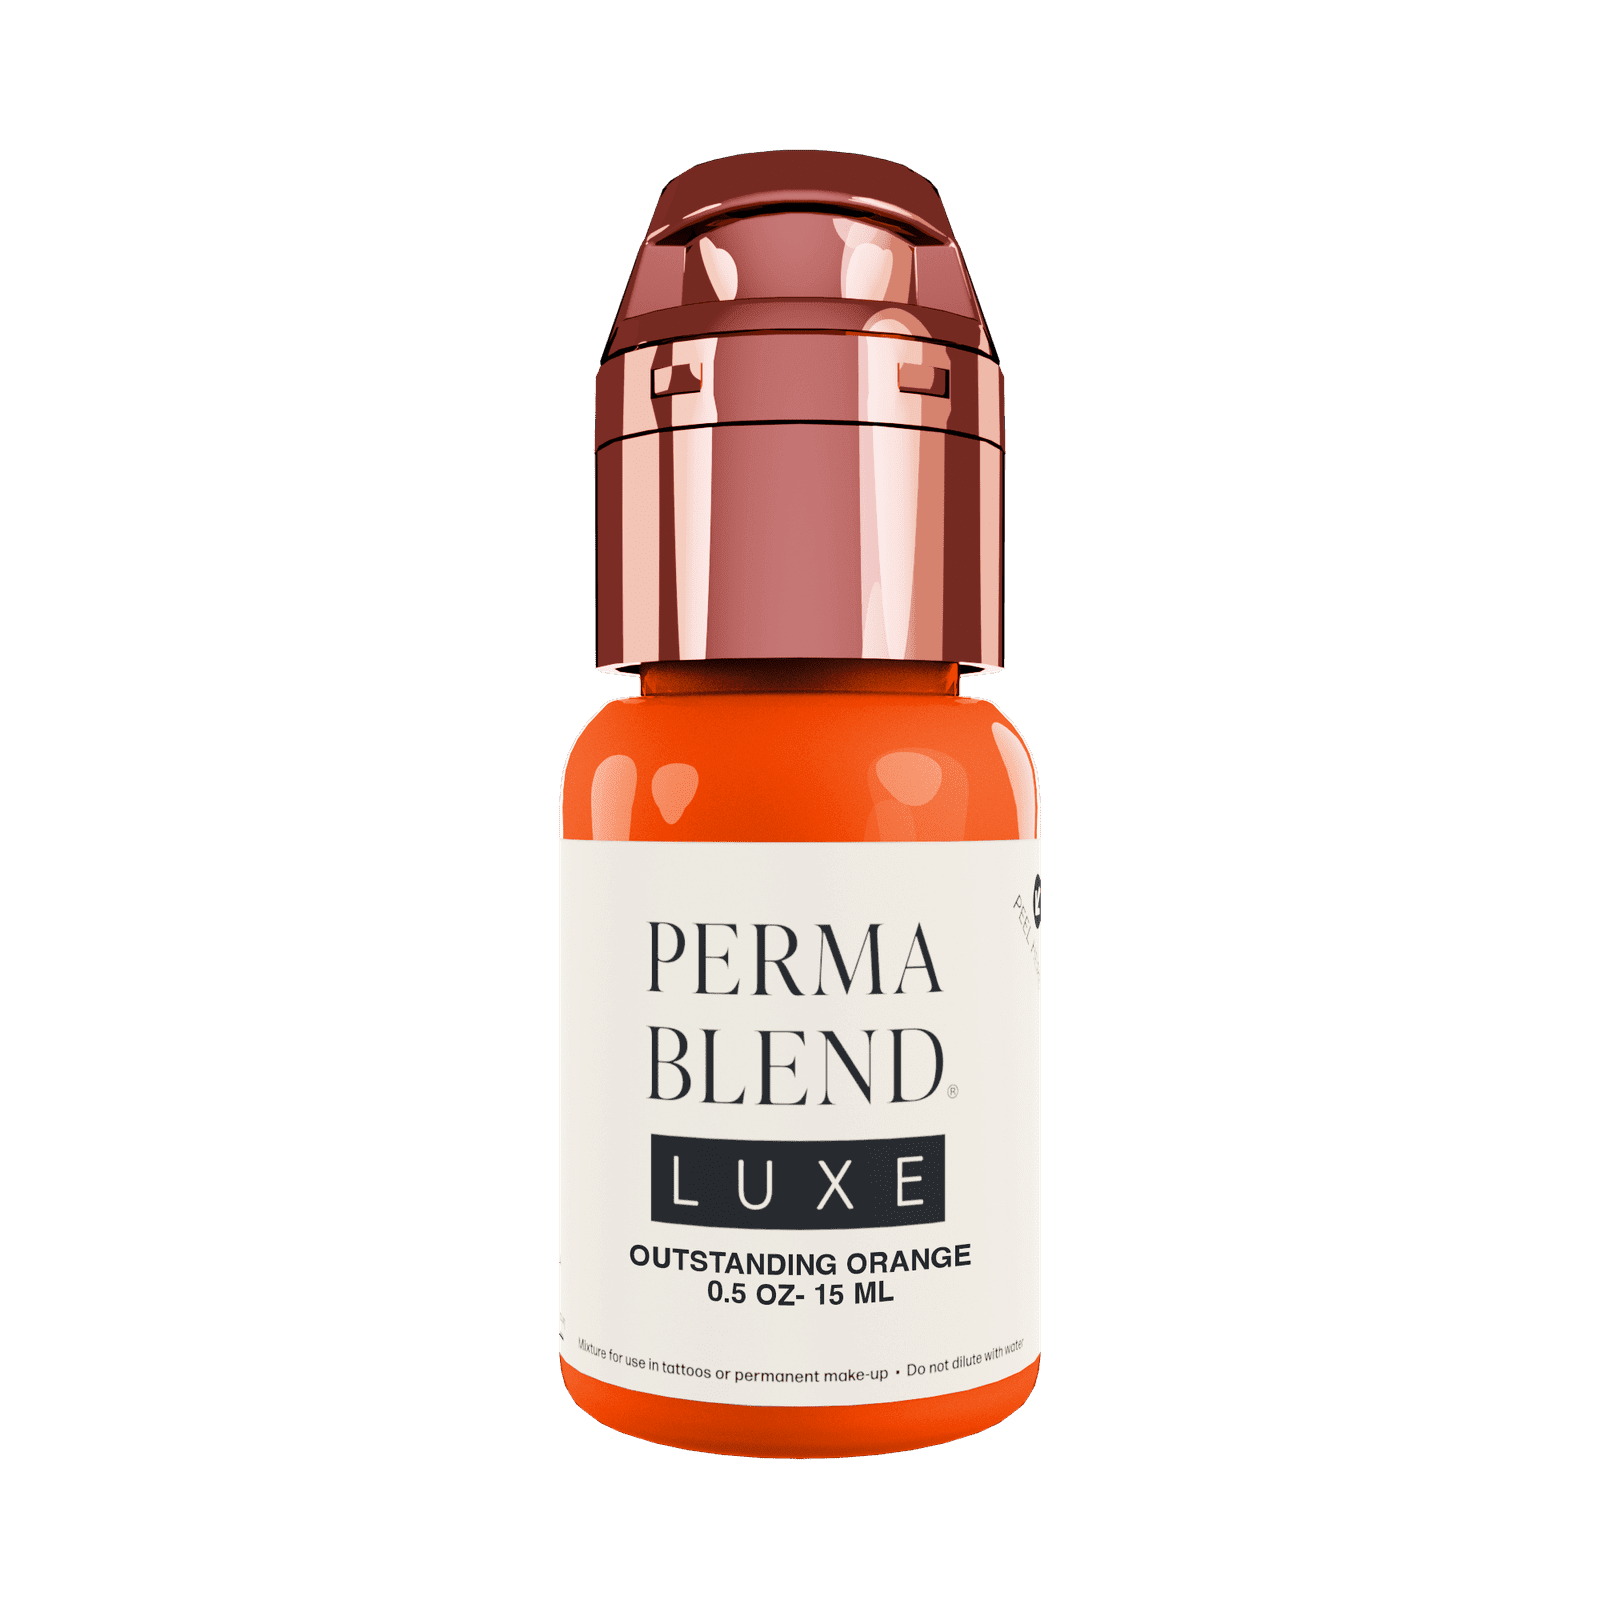 Perma Blend Luxe Outstanding Orange